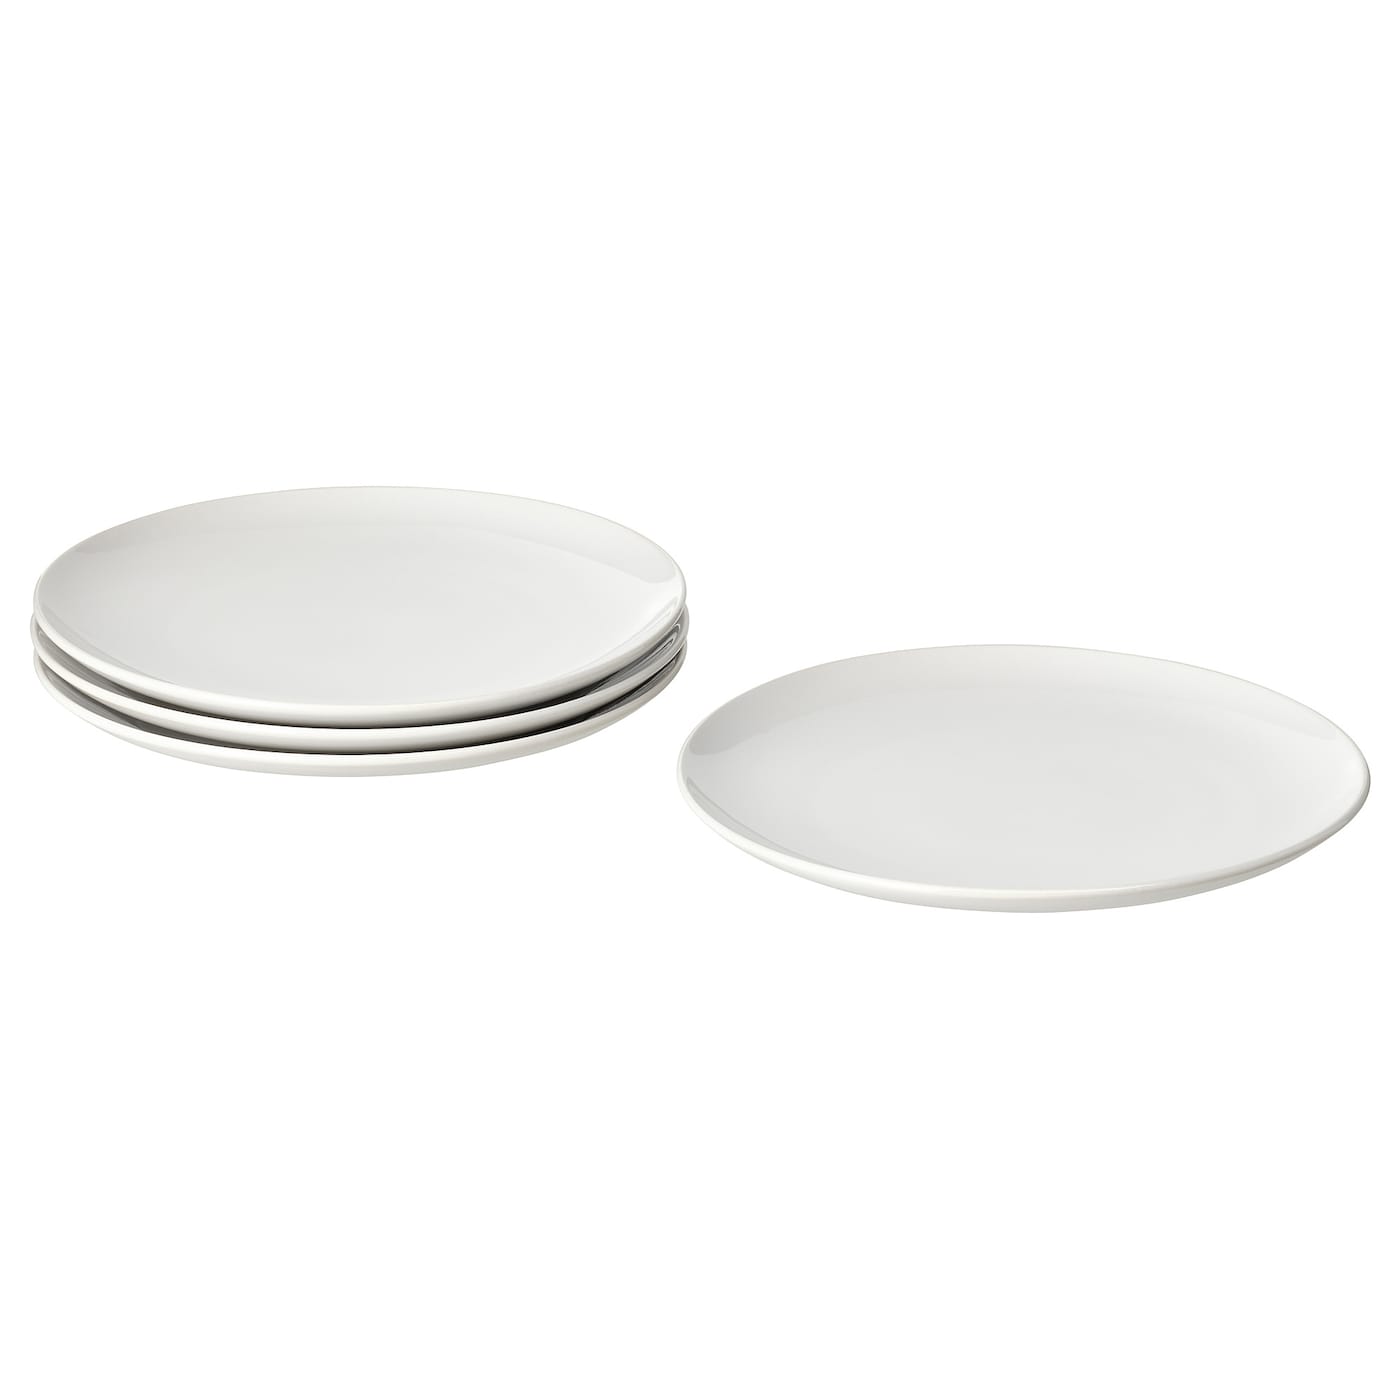 Набор тарелок, 4 шт. - IKEA GODMIDDAG, 26 см, белый, ГОДМИДДАГ ИКЕА